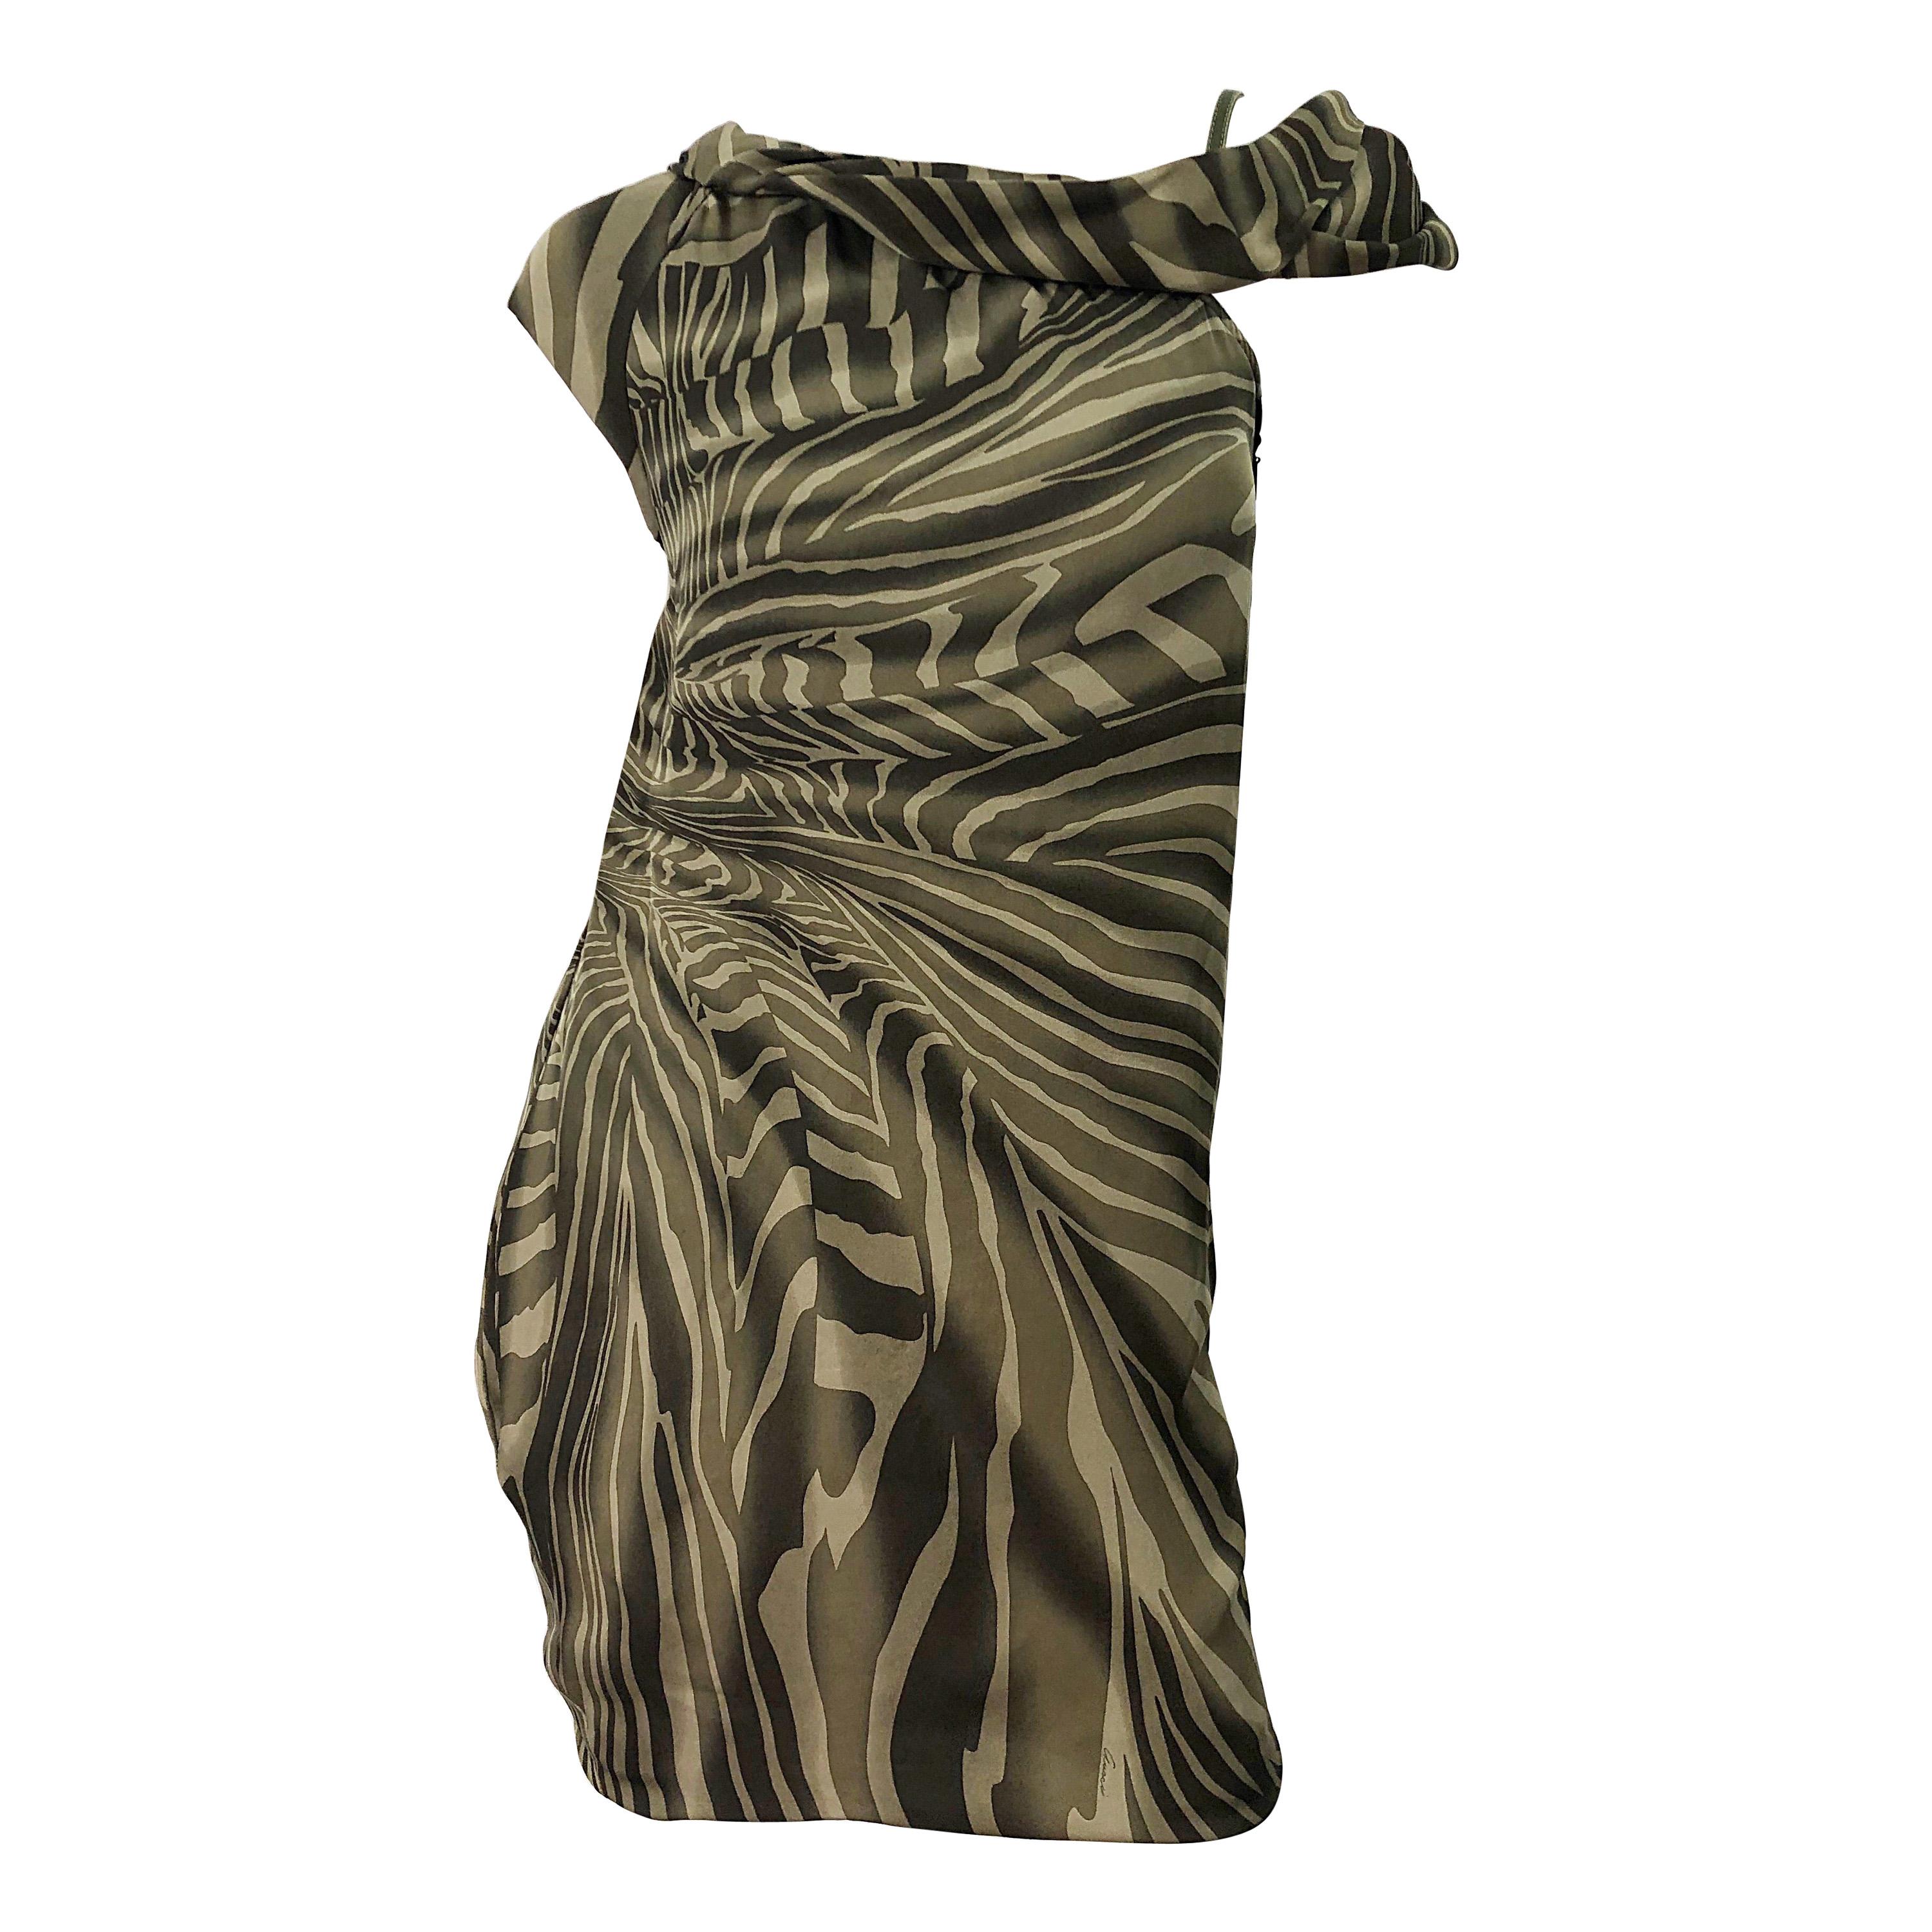 Tom Ford for Gucci Olive + Khaki Zebra Print Silk Chiffon Off Shoulder Dress